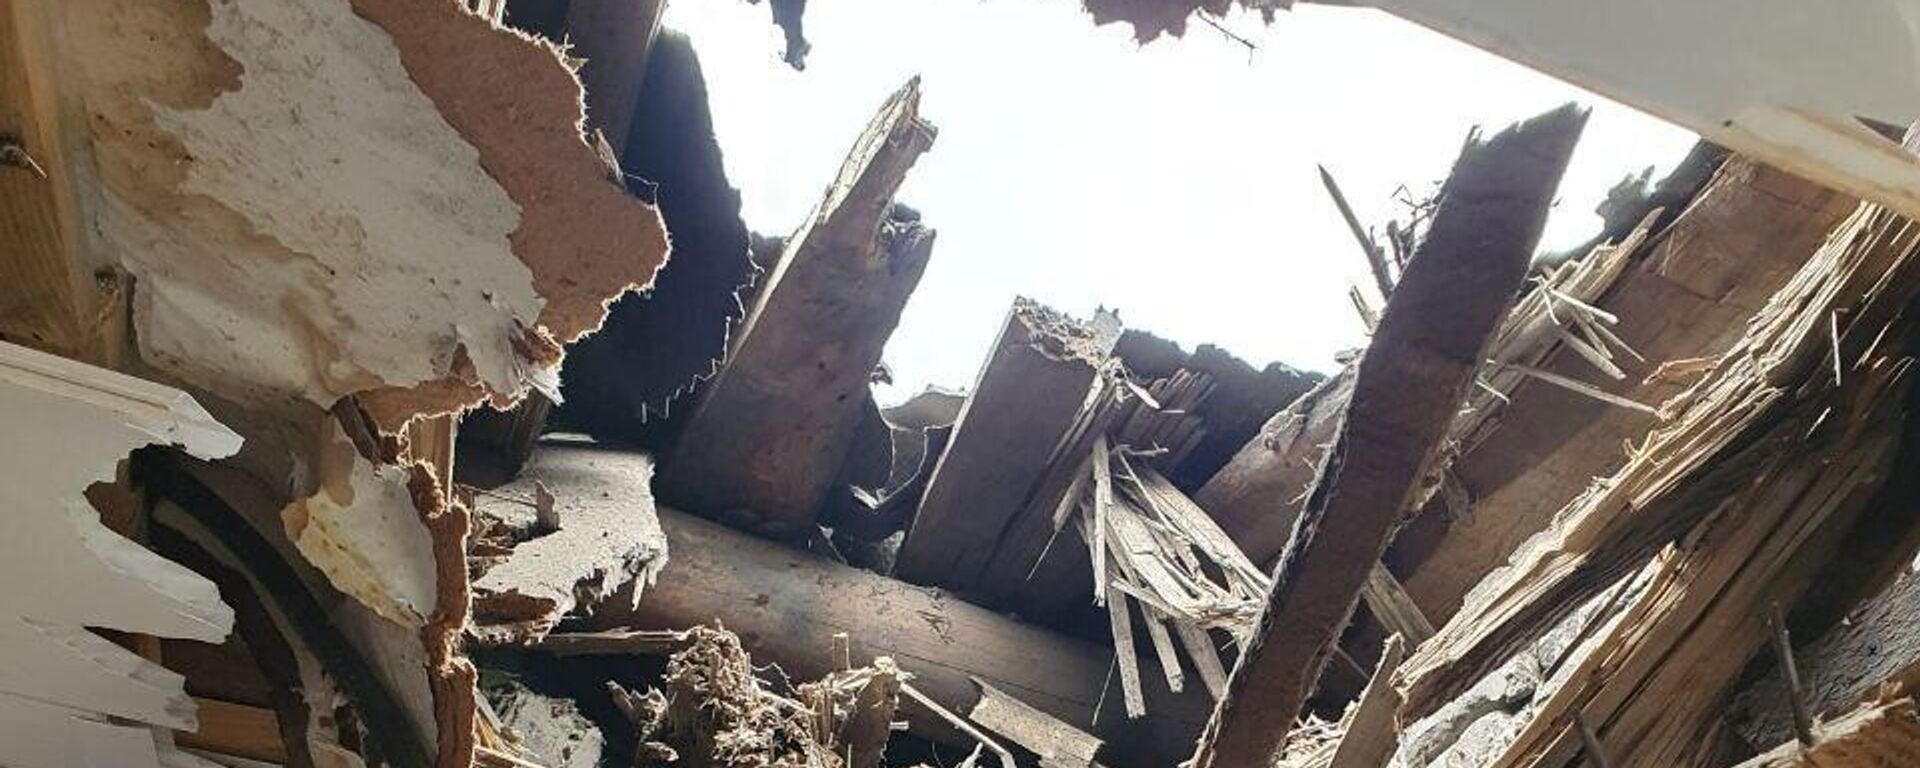 Casa dañada tras bombardeo perpetrado por tropas ucranianas en Górlovka, Donetsk - Sputnik Mundo, 1920, 12.05.2023